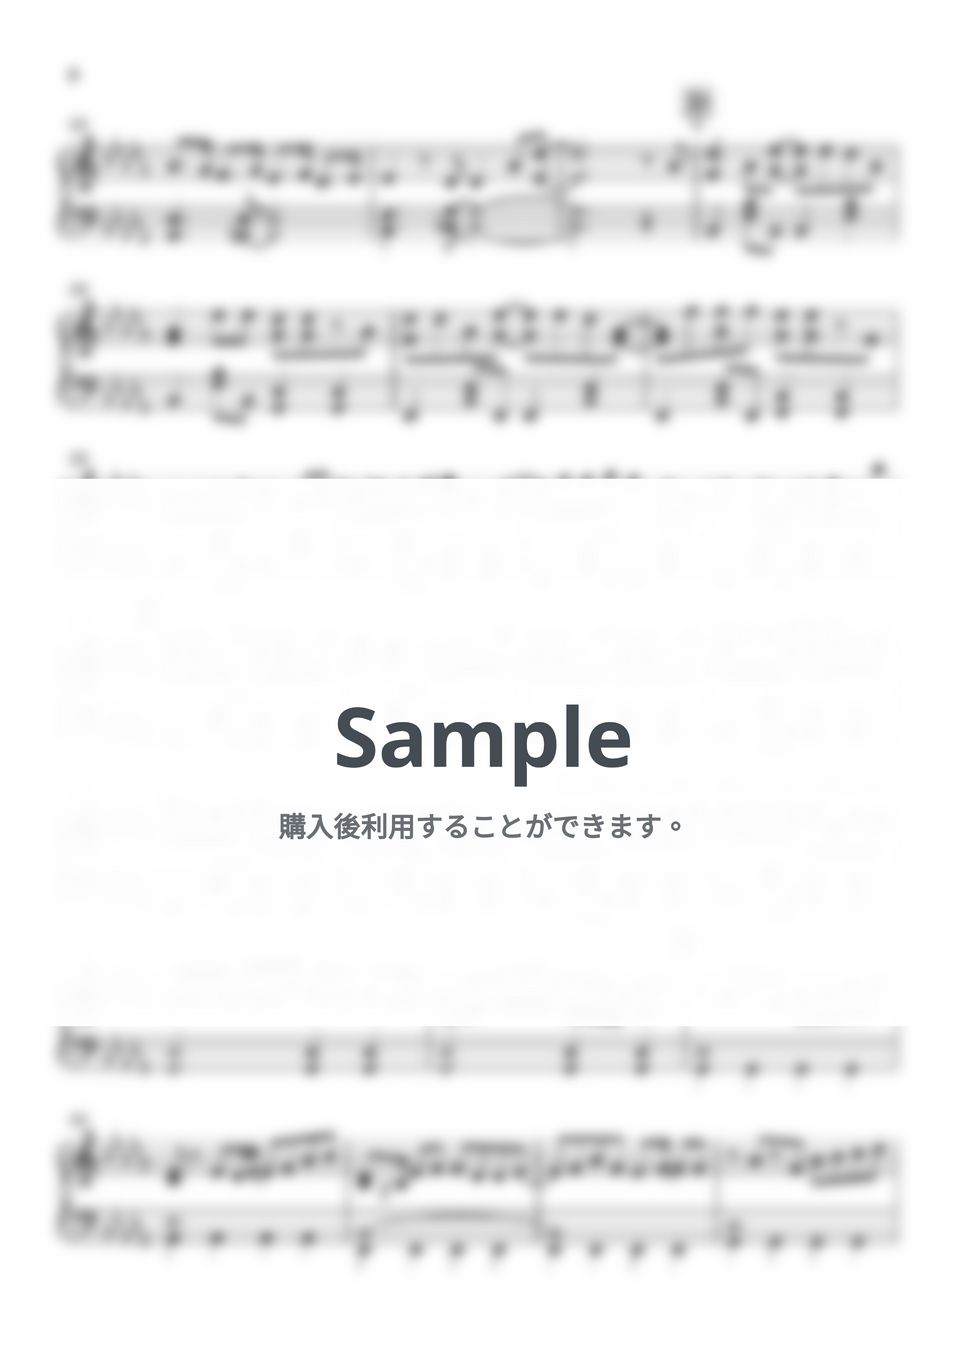 BUMP OF CHICKEN - Sleep Walking Orchestra (ダンジョン飯 / ピアノ楽譜) by Piano Lovers. jp